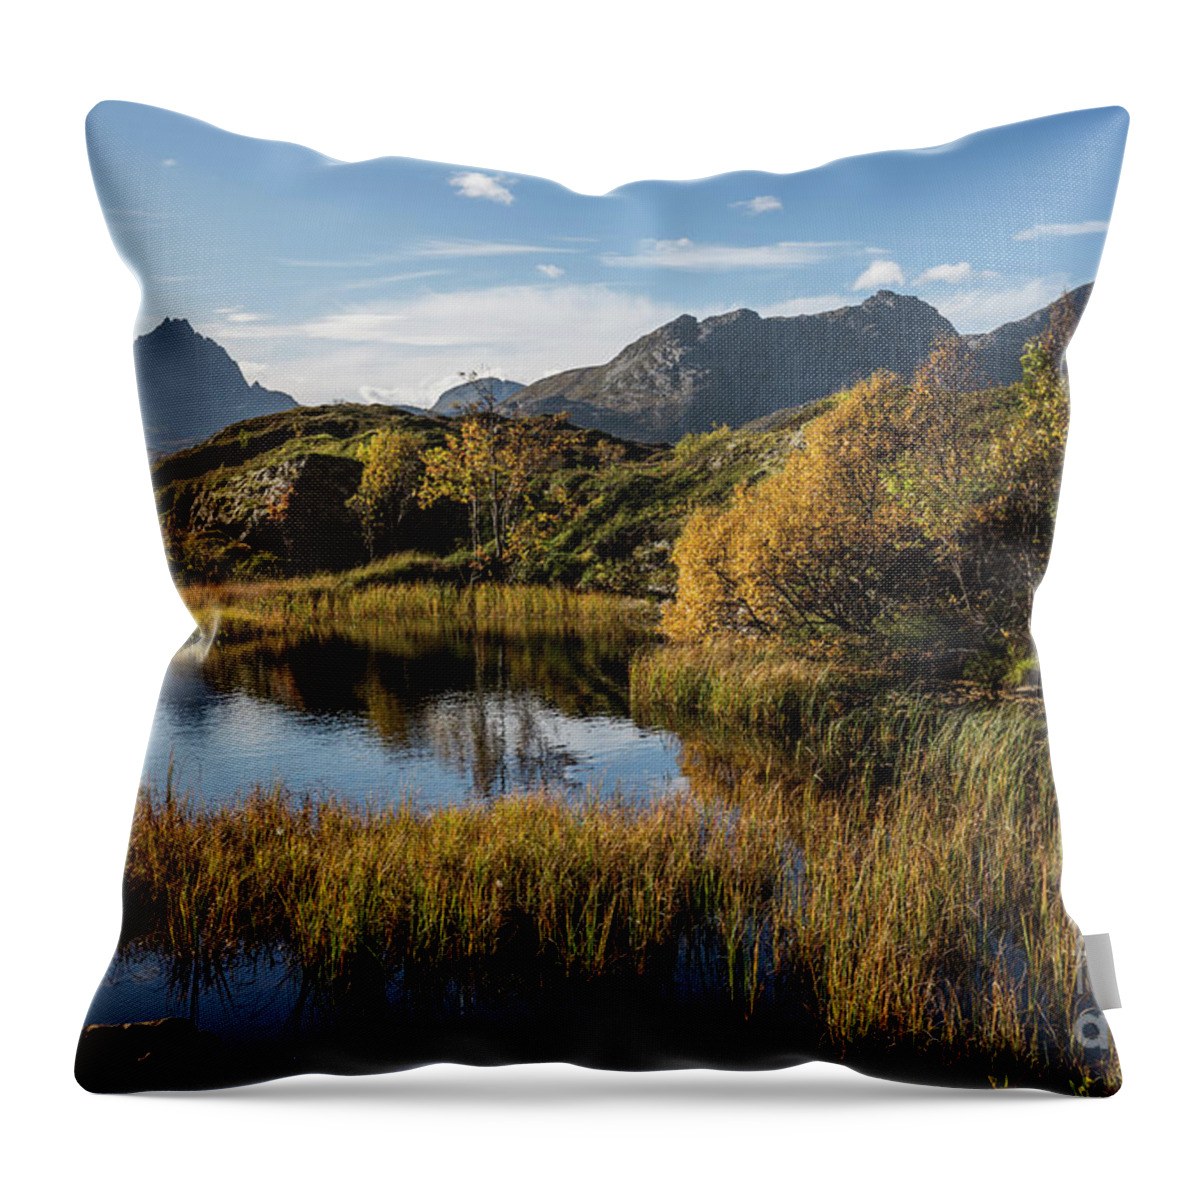 Marsh Throw Pillow featuring the photograph Autumn on the Lofoten Islands by Eva Lechner